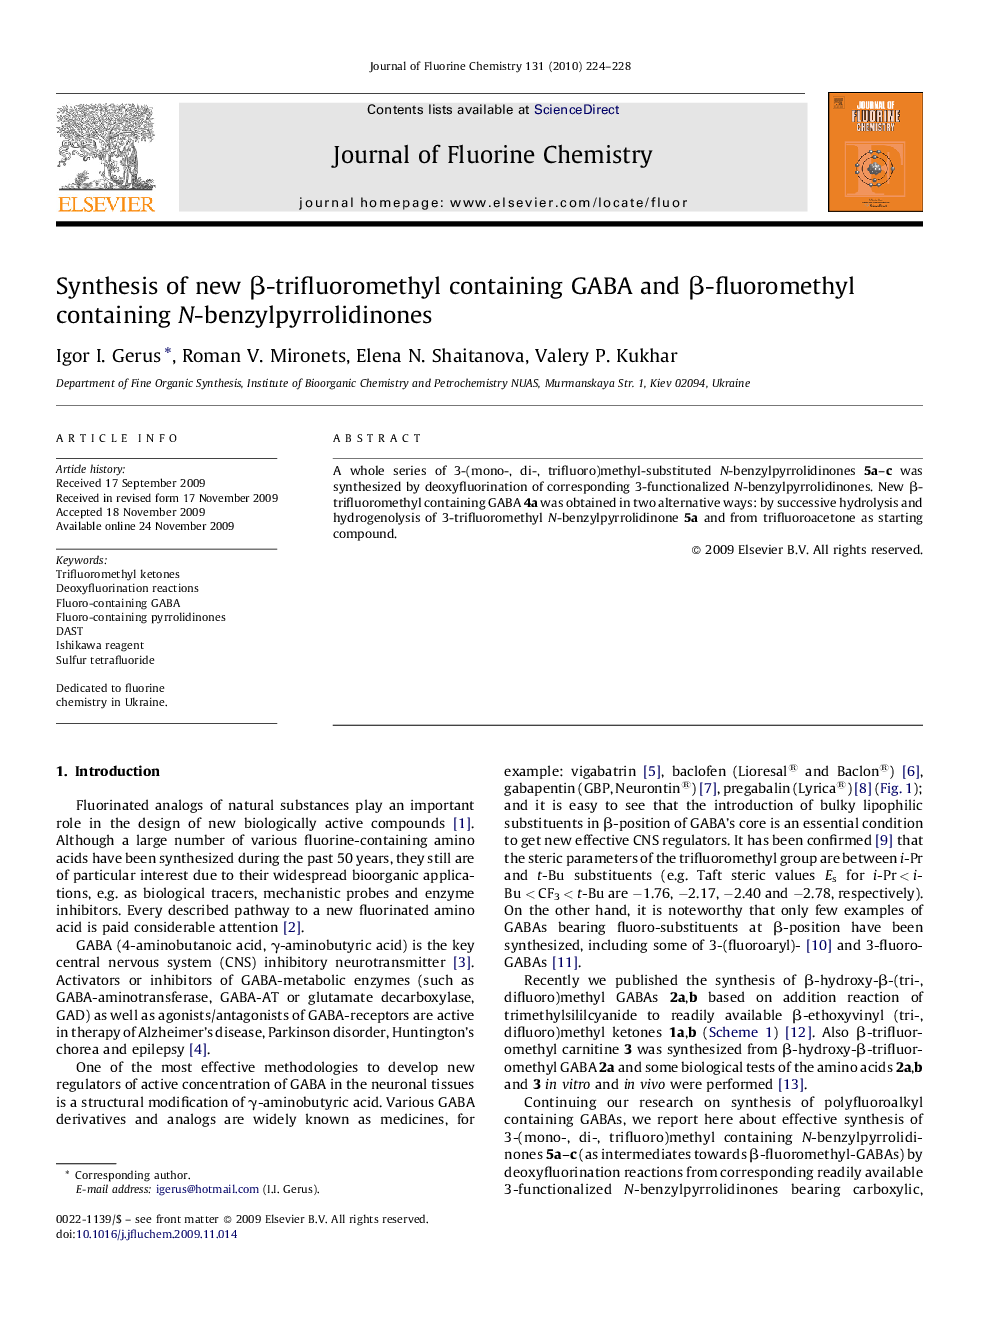 Synthesis of new β-trifluoromethyl containing GABA and β-fluoromethyl containing N-benzylpyrrolidinones